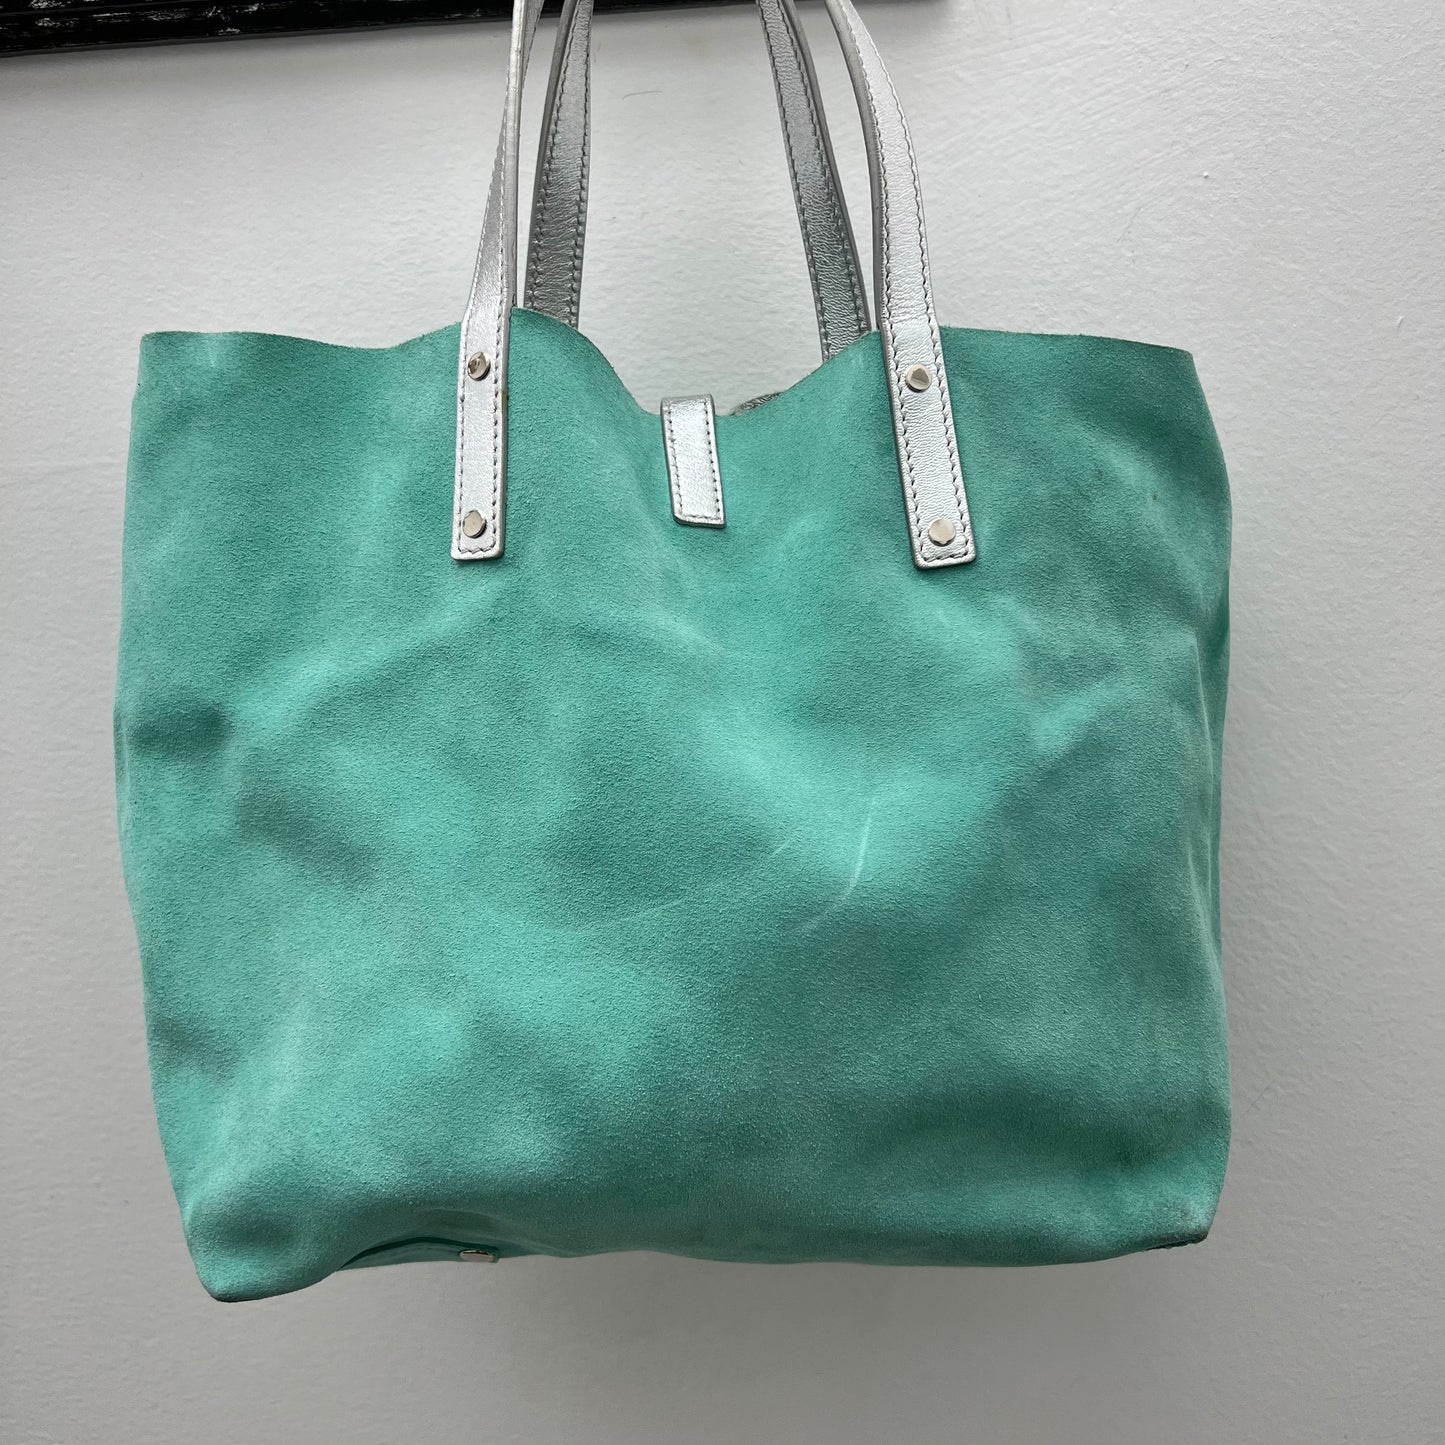 Tiffany Silver Hobo Bag